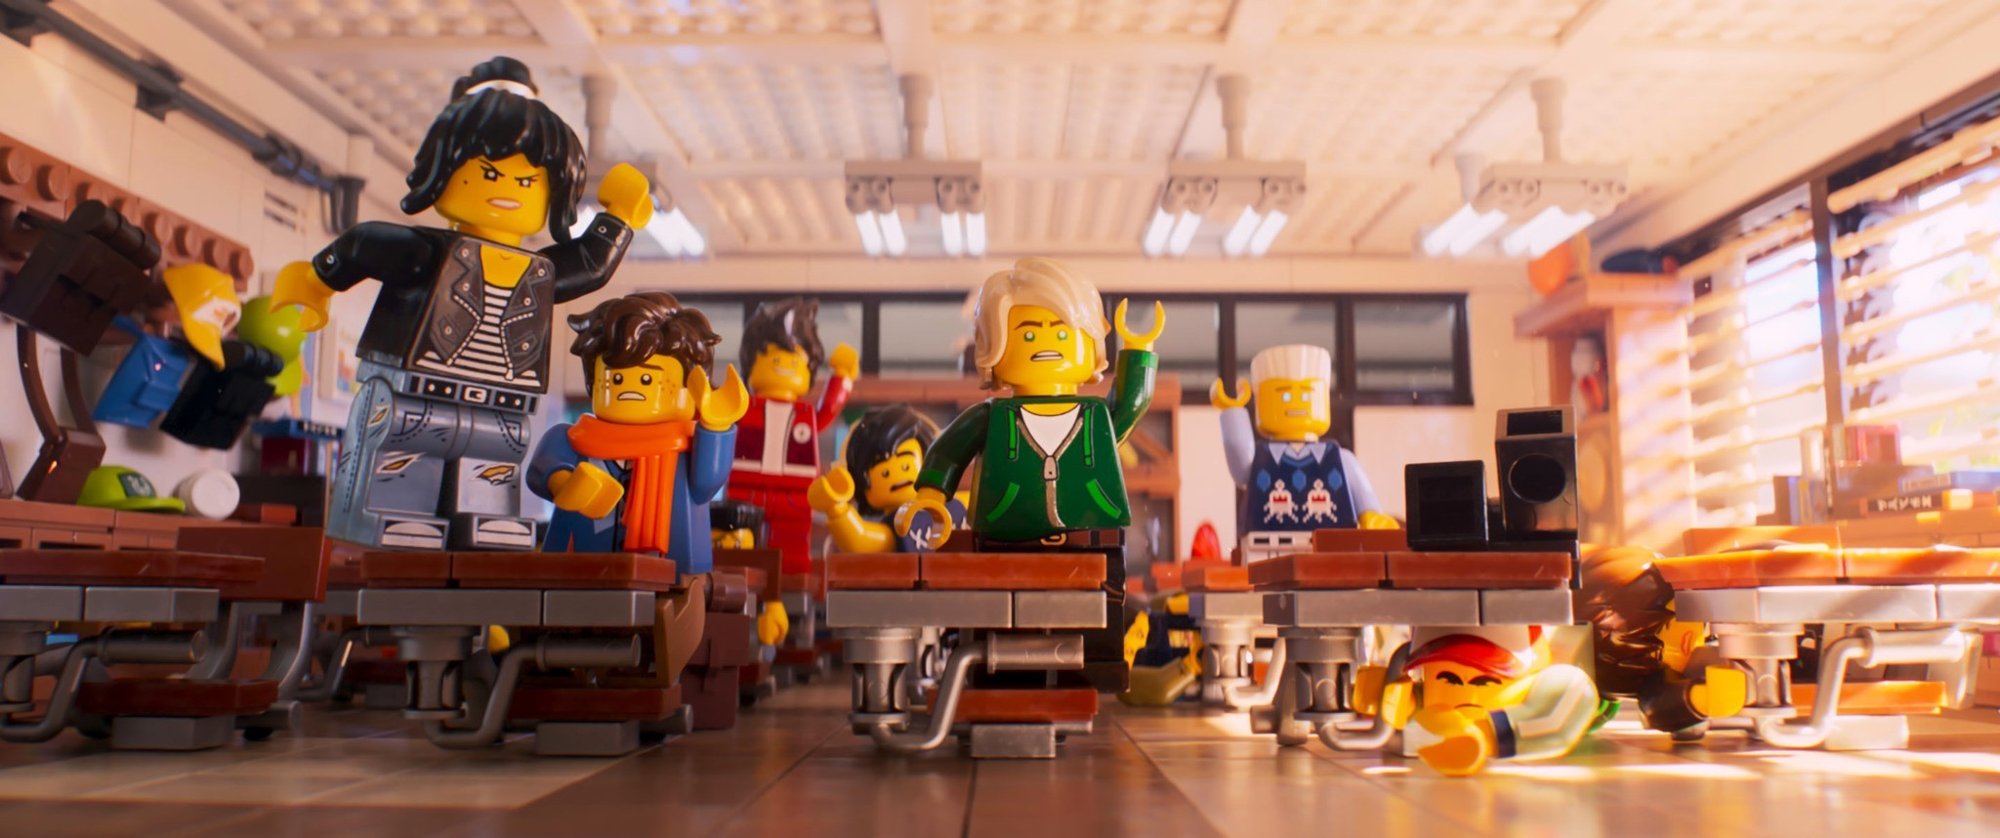 Nya, Jay, Kai, Cole, Lloyd and Zane from Warner Bros. Pictures' The Lego Ninjago Movie (2017)